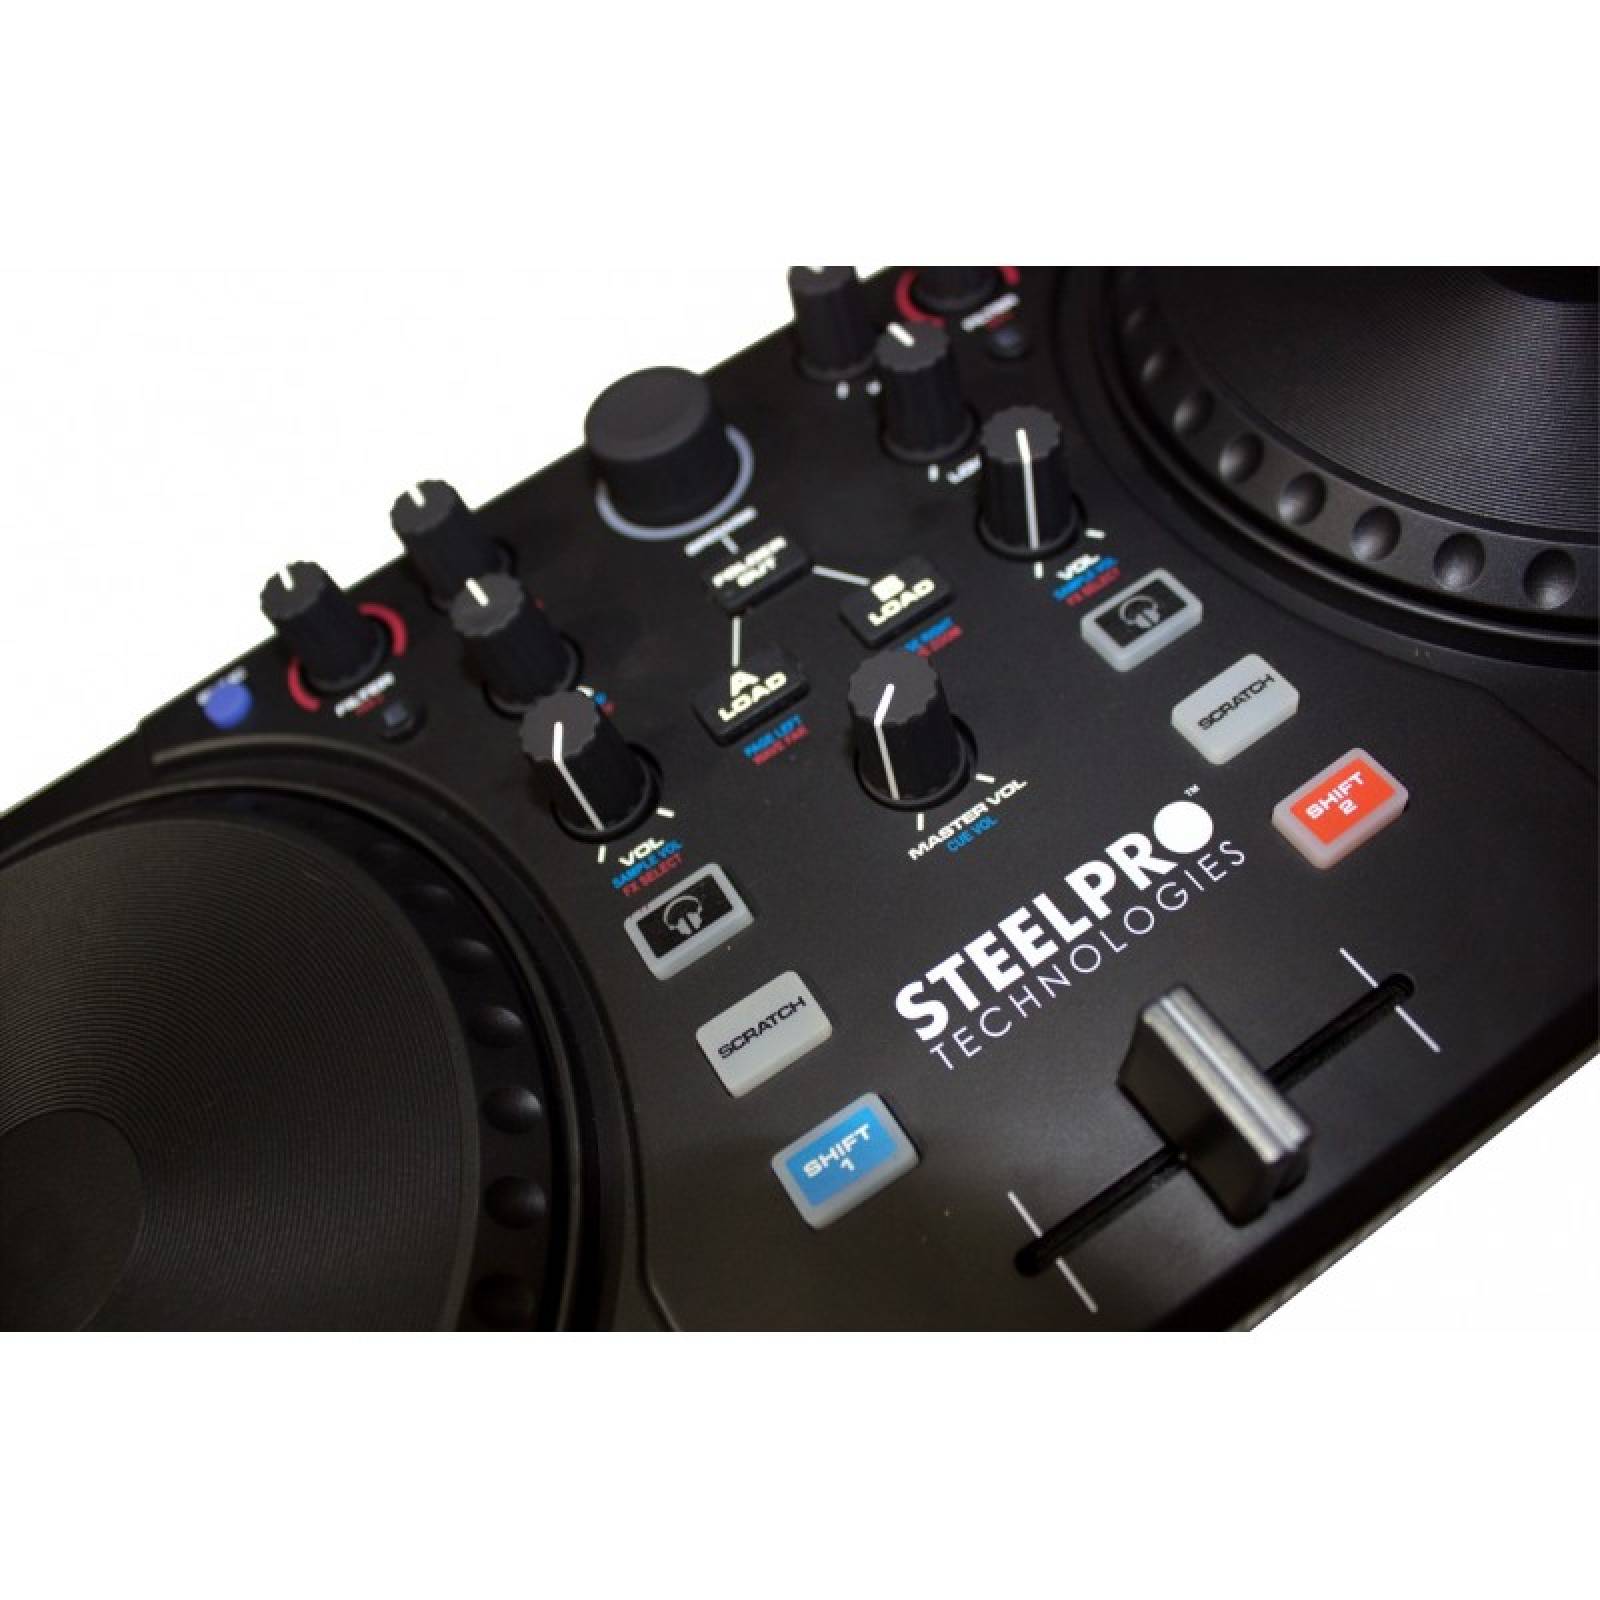 CONTROLADOR MIXER PARA DJ STEELPRO MIDI 1000